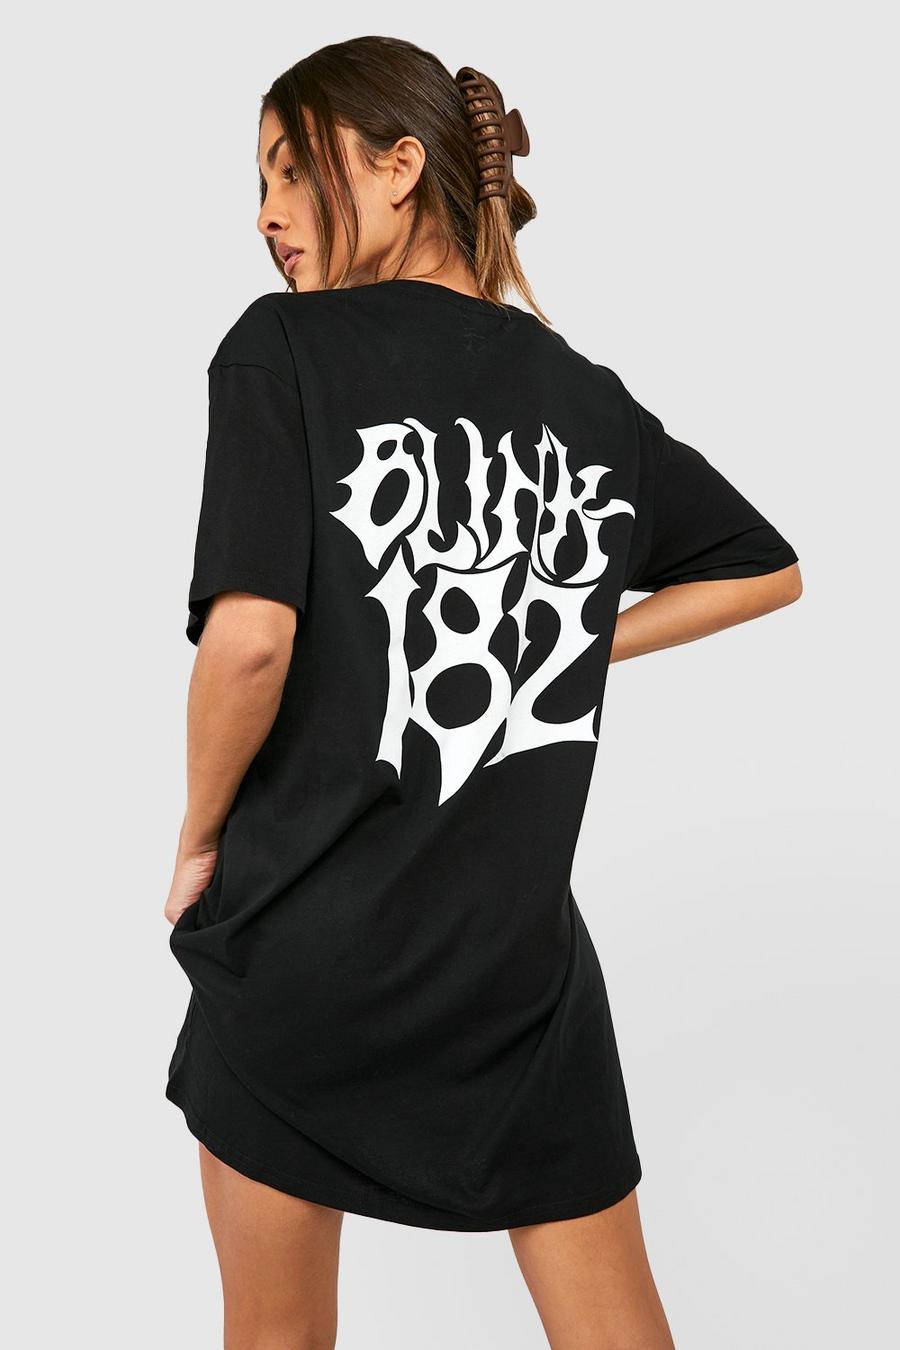 Black schwarz Blink 182 License Back Print T-shirt Dress